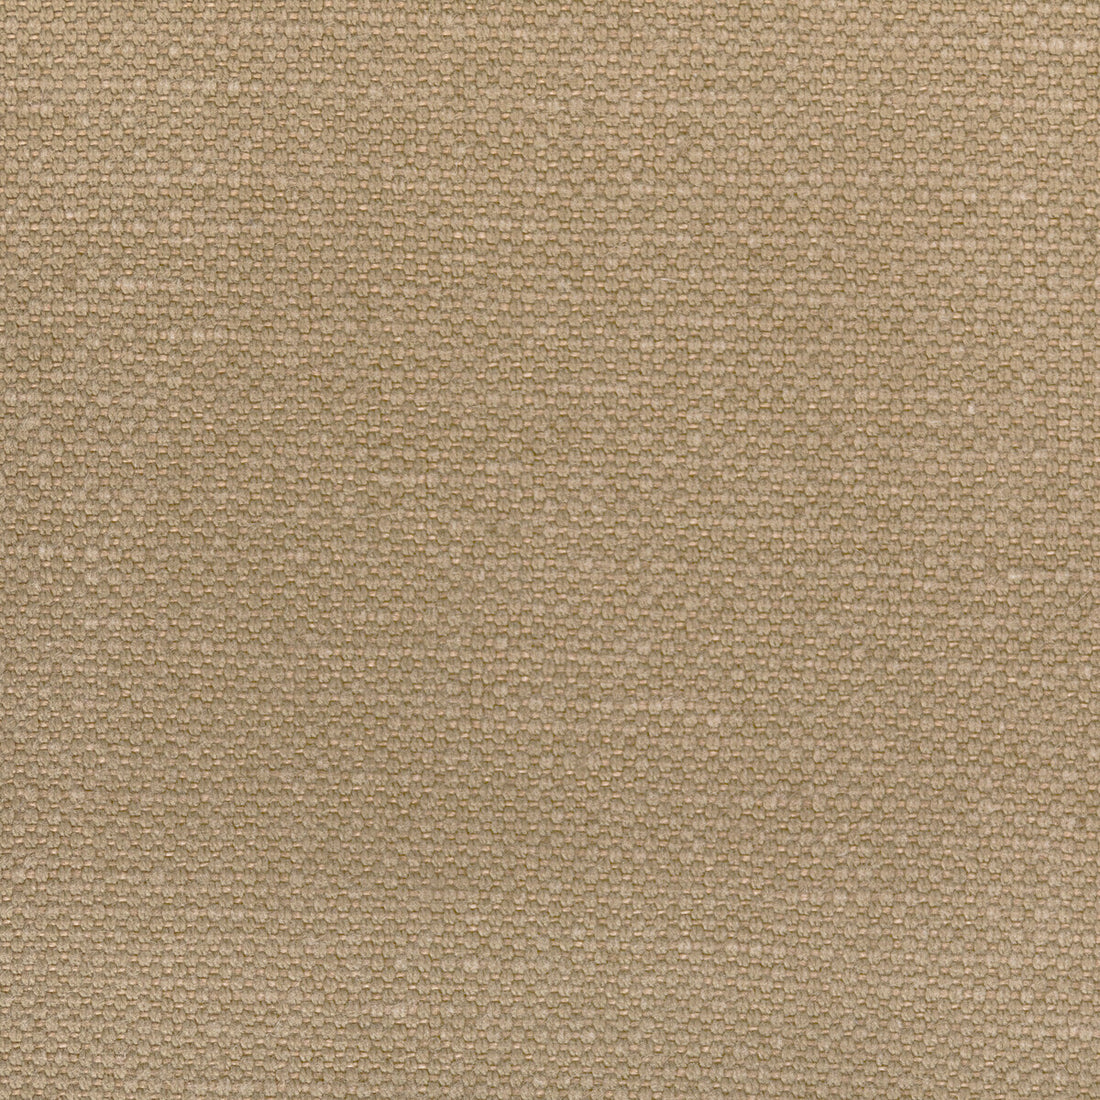 Carson fabric in tea color - pattern 36282.6116.0 - by Kravet Basics